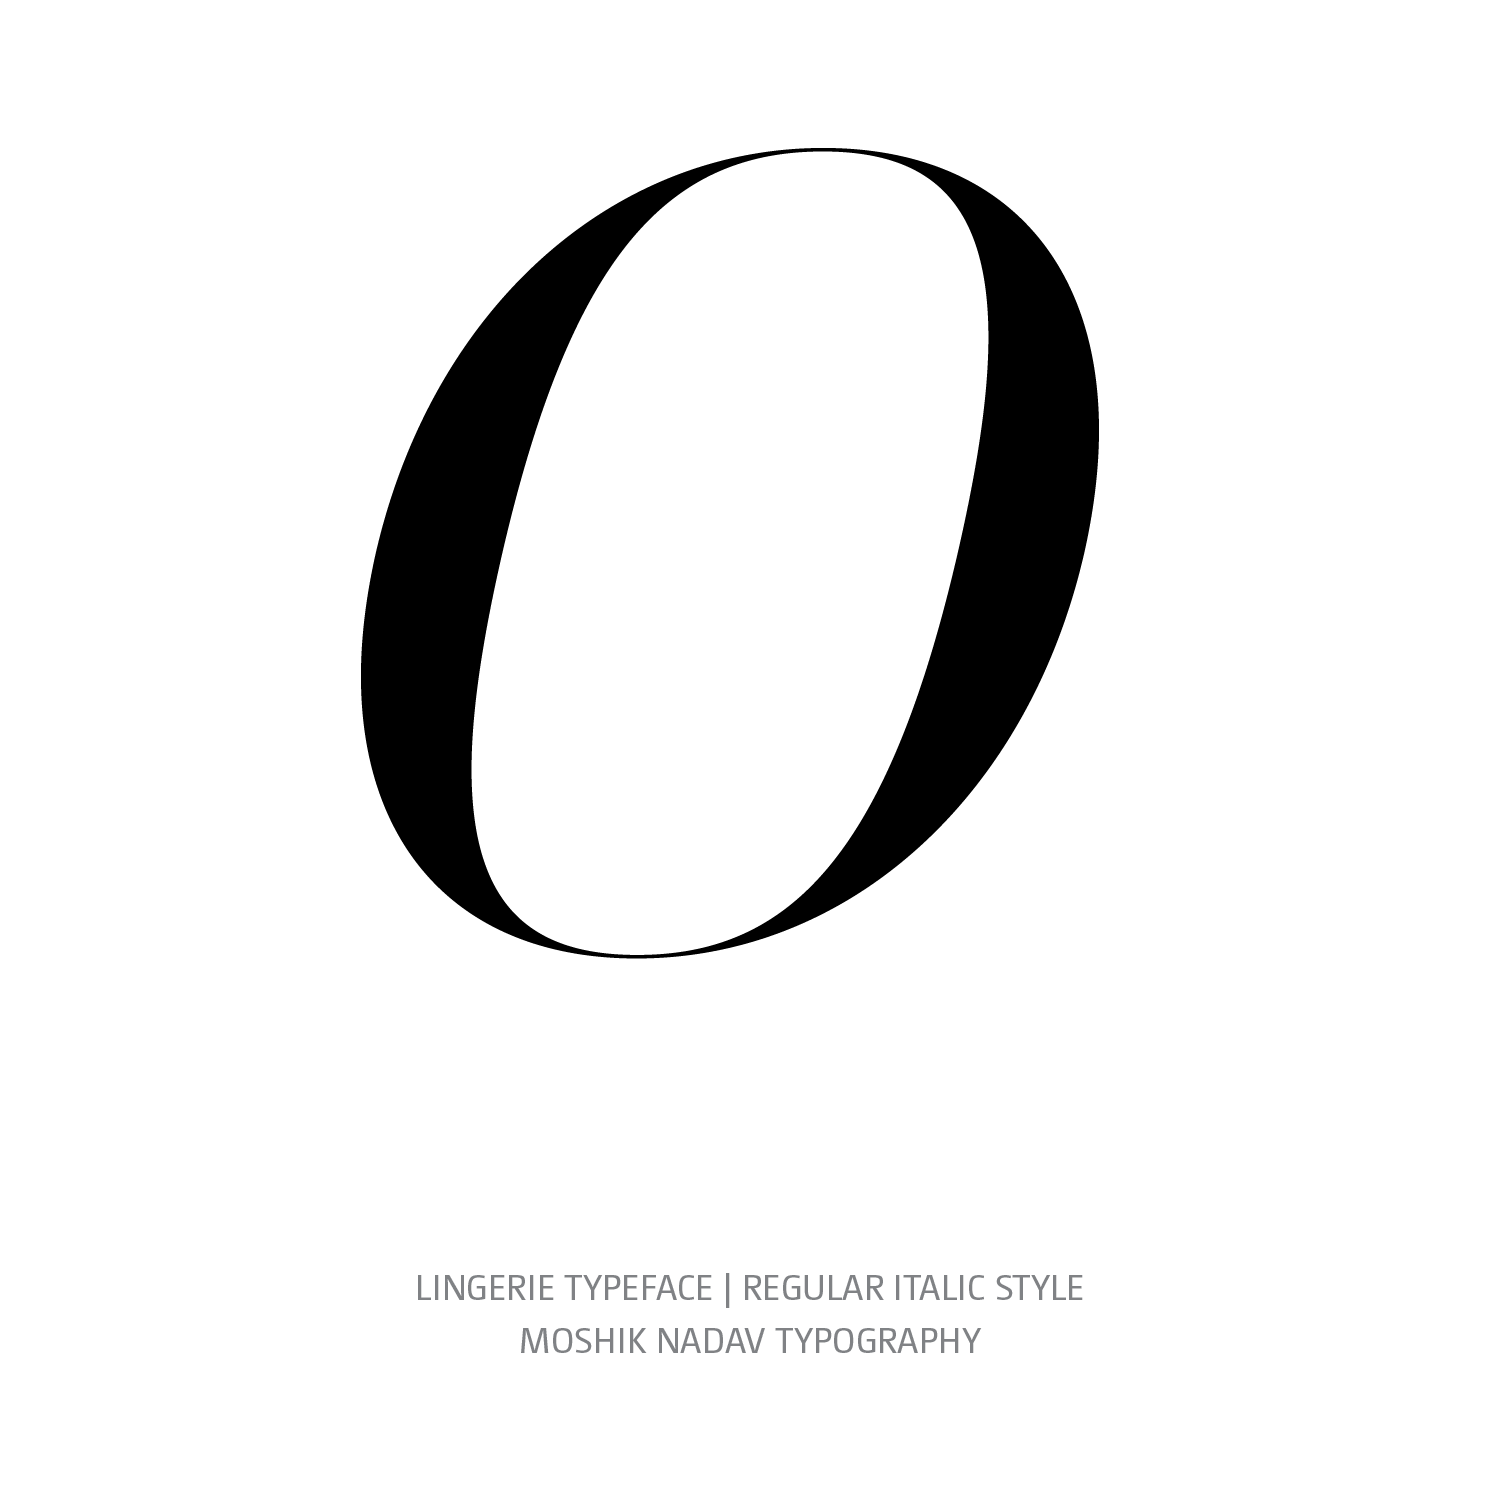 Lingerie Typeface Regular Italic 0 - Fashion fonts by Moshik Nadav Typography